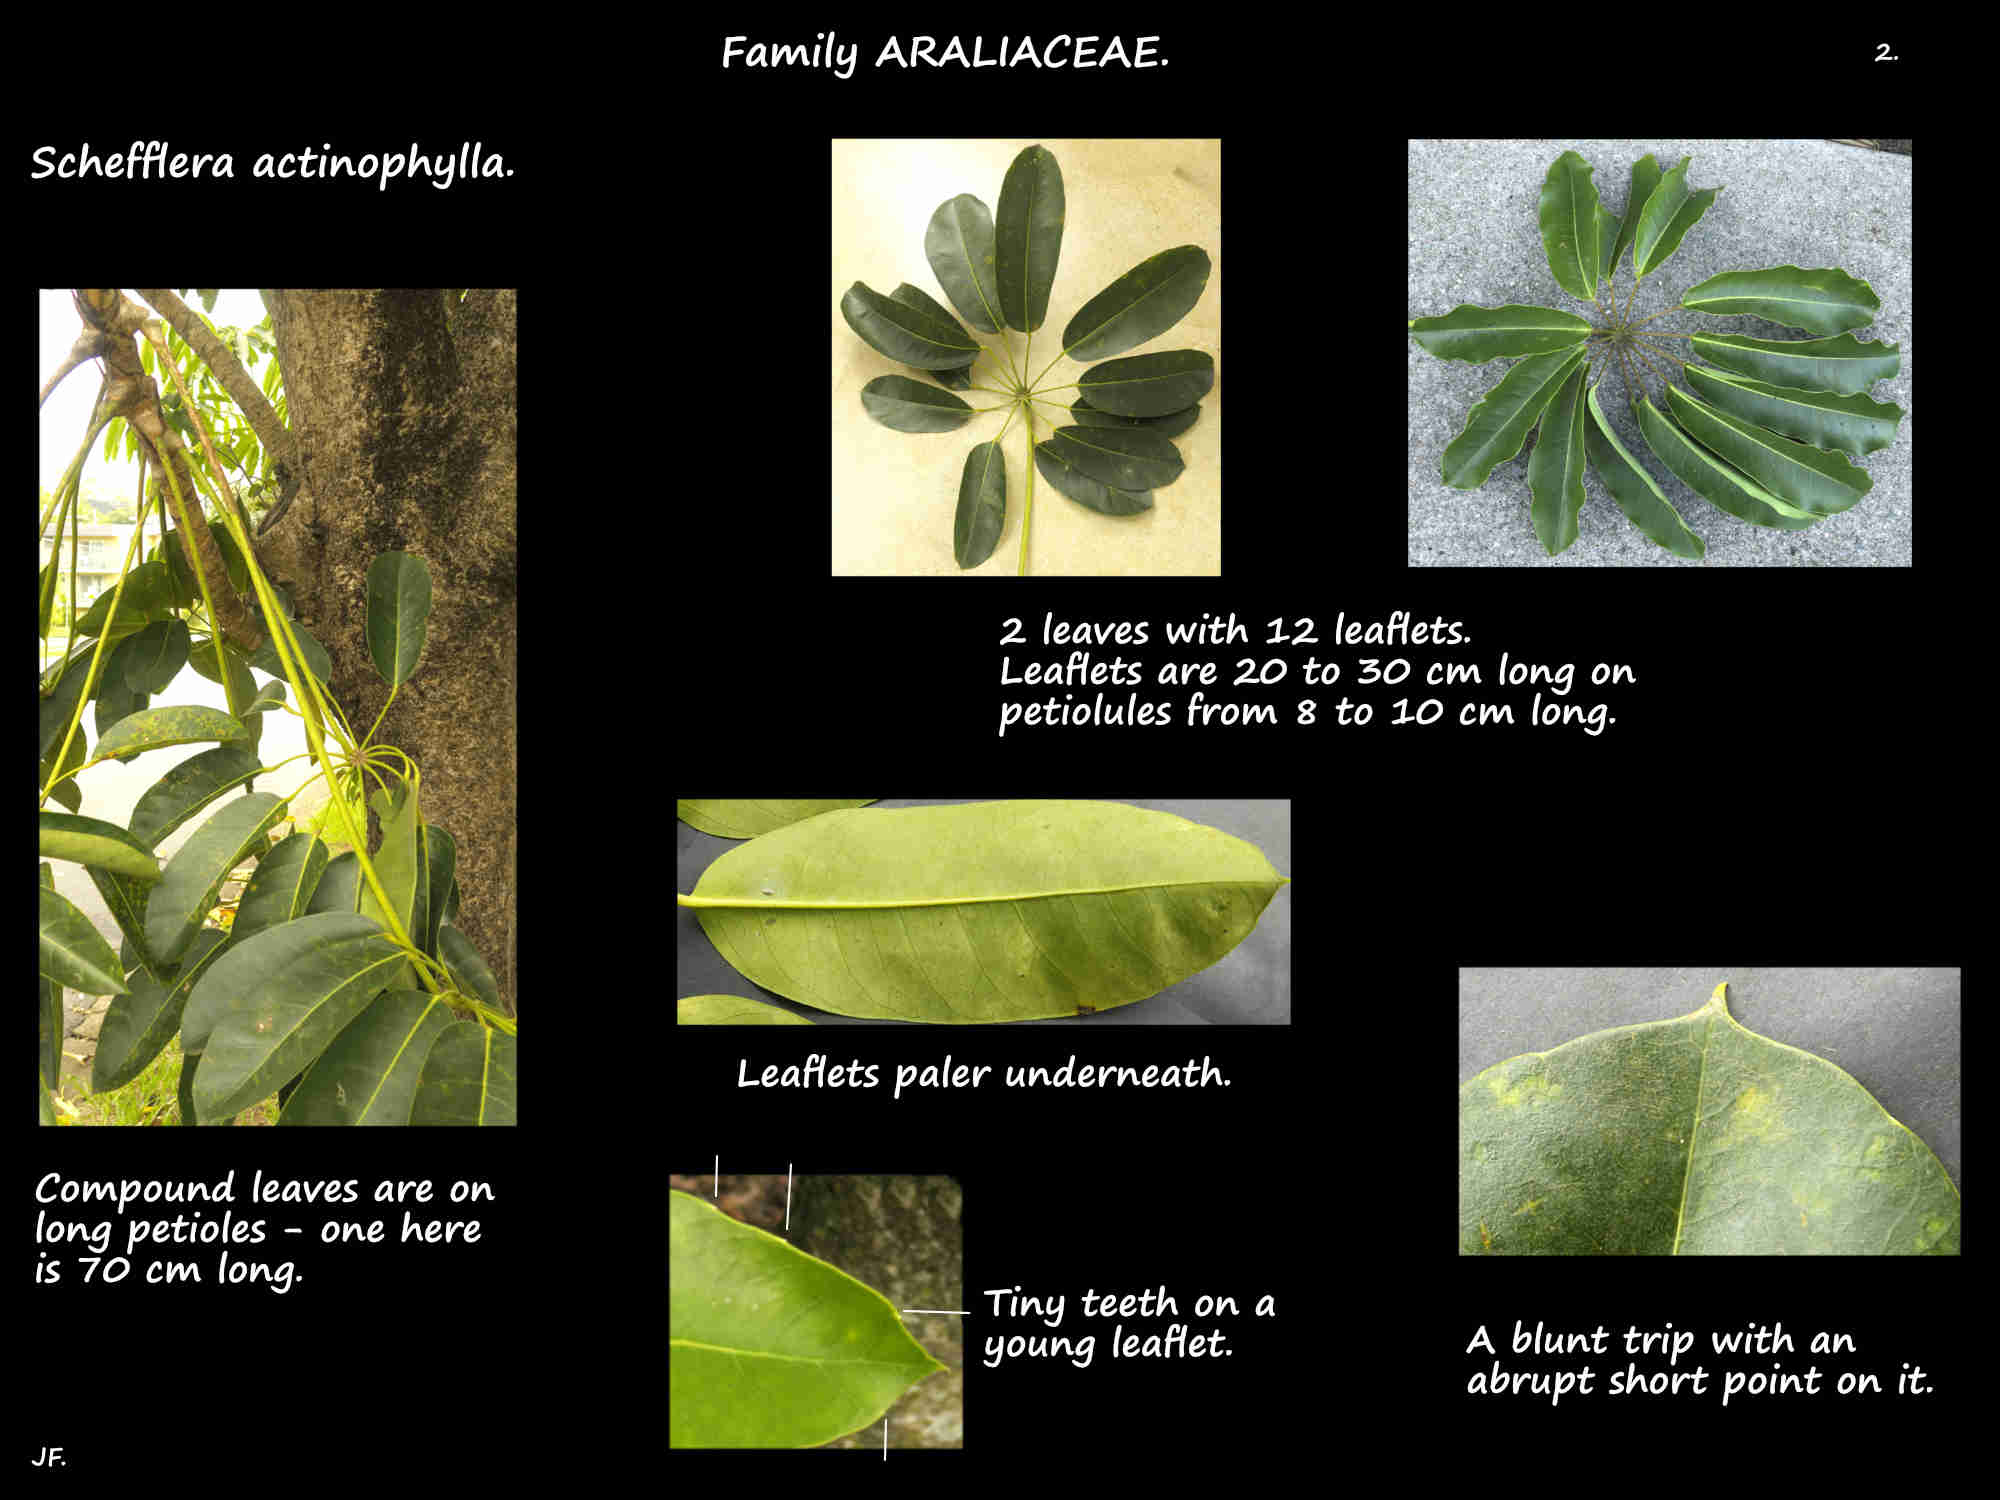 2 Leaves of Schefflera actinophylla